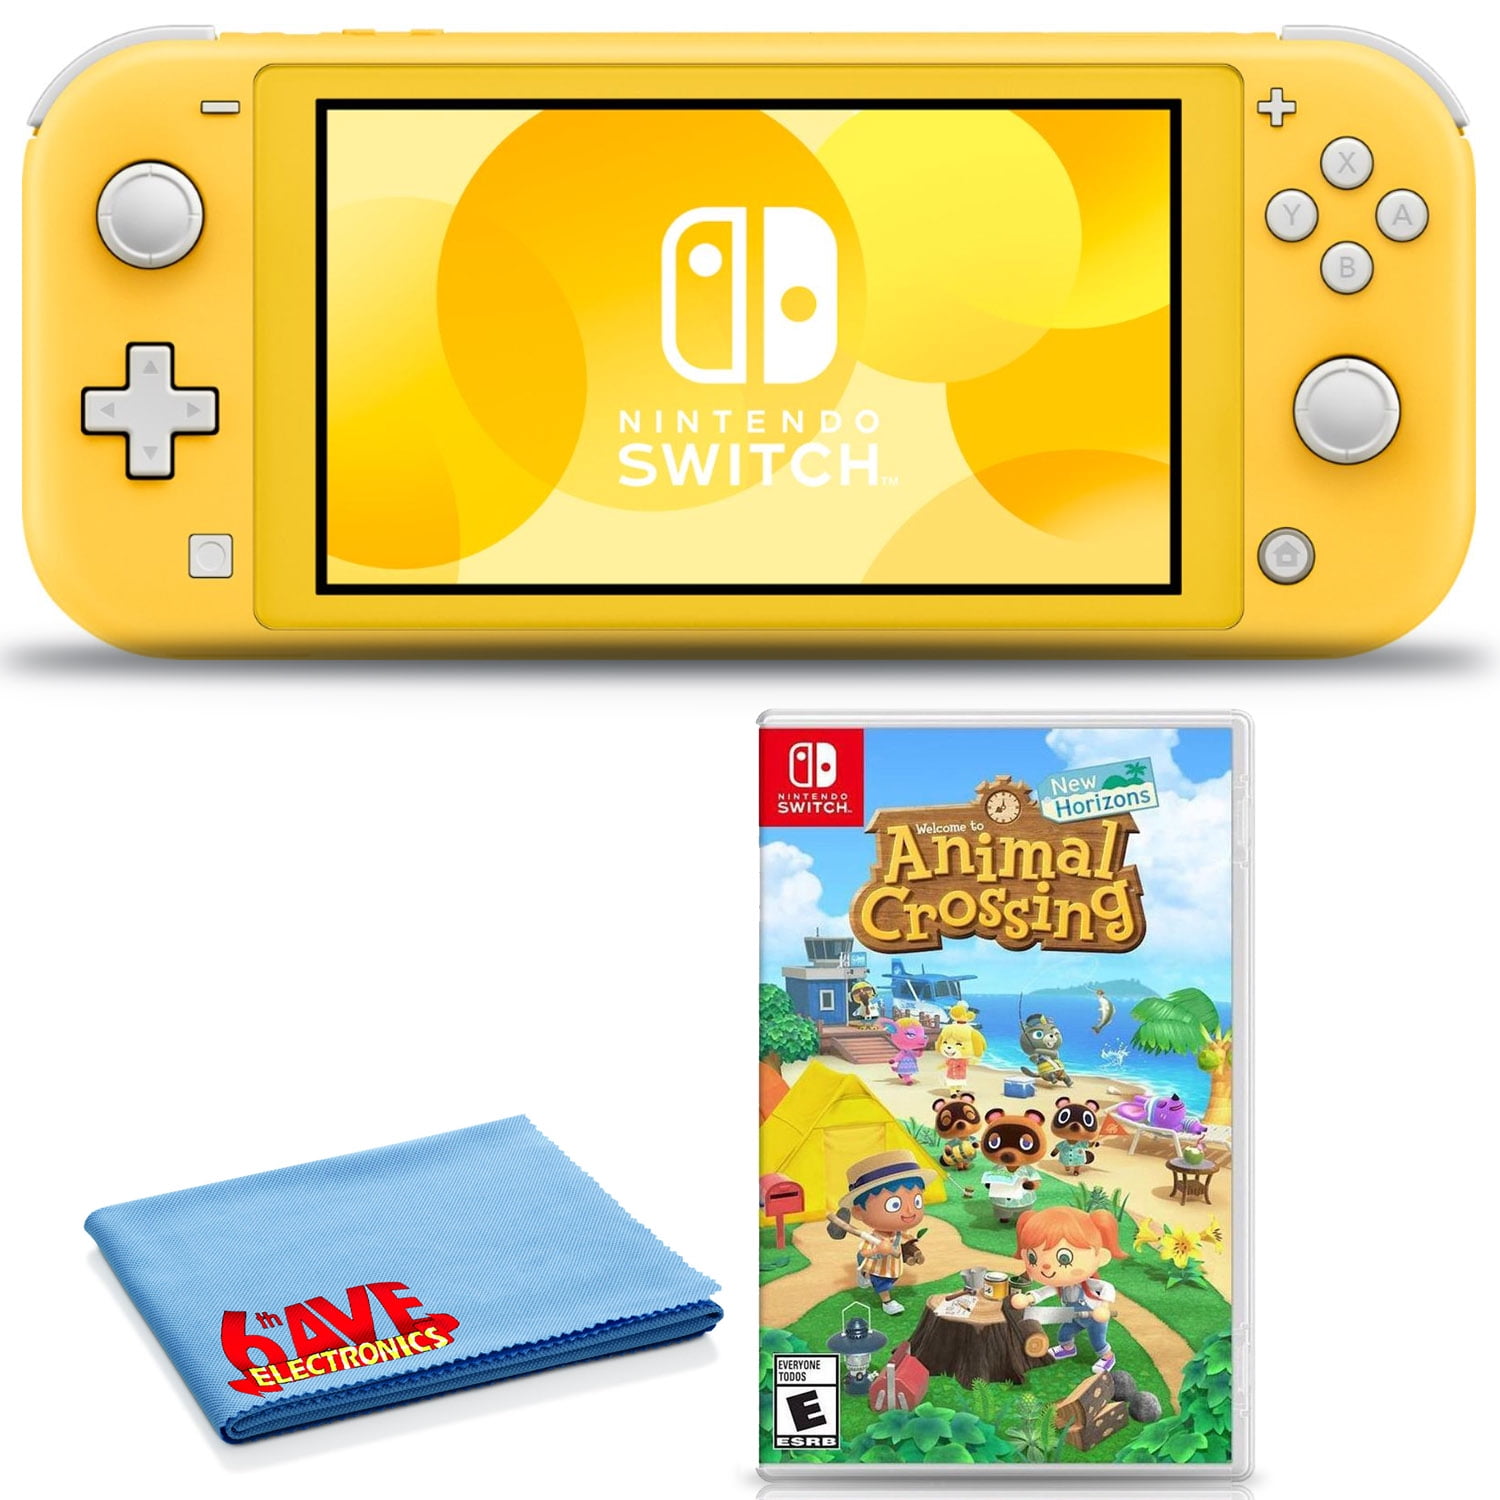 Nintendo Switch Lite (Yellow) Bundle Includes Animal Crossing: New